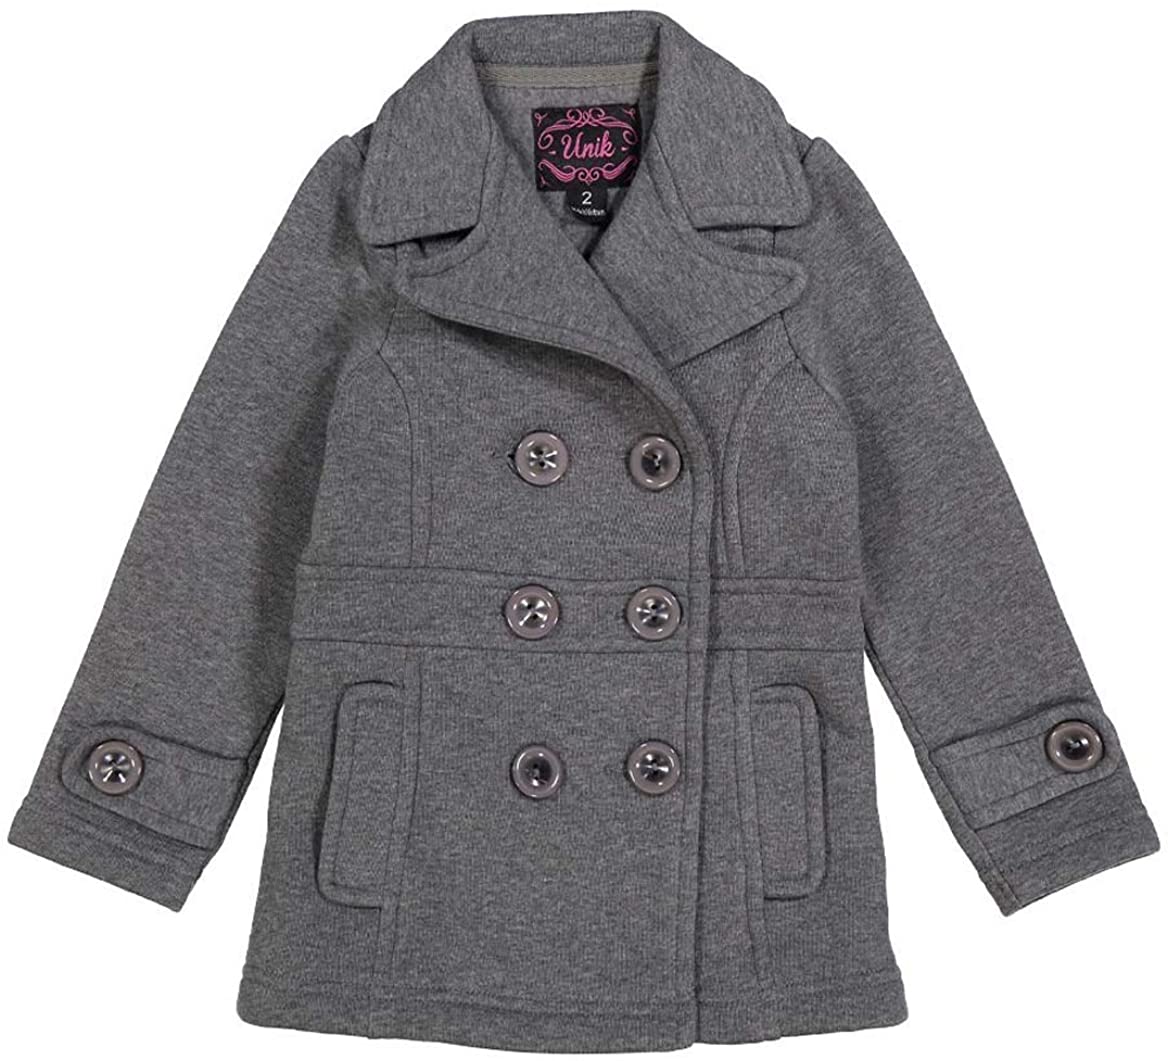 unik Girl Fleece Coat with Buttons, Dark Grey Size 2 - image 4 of 6